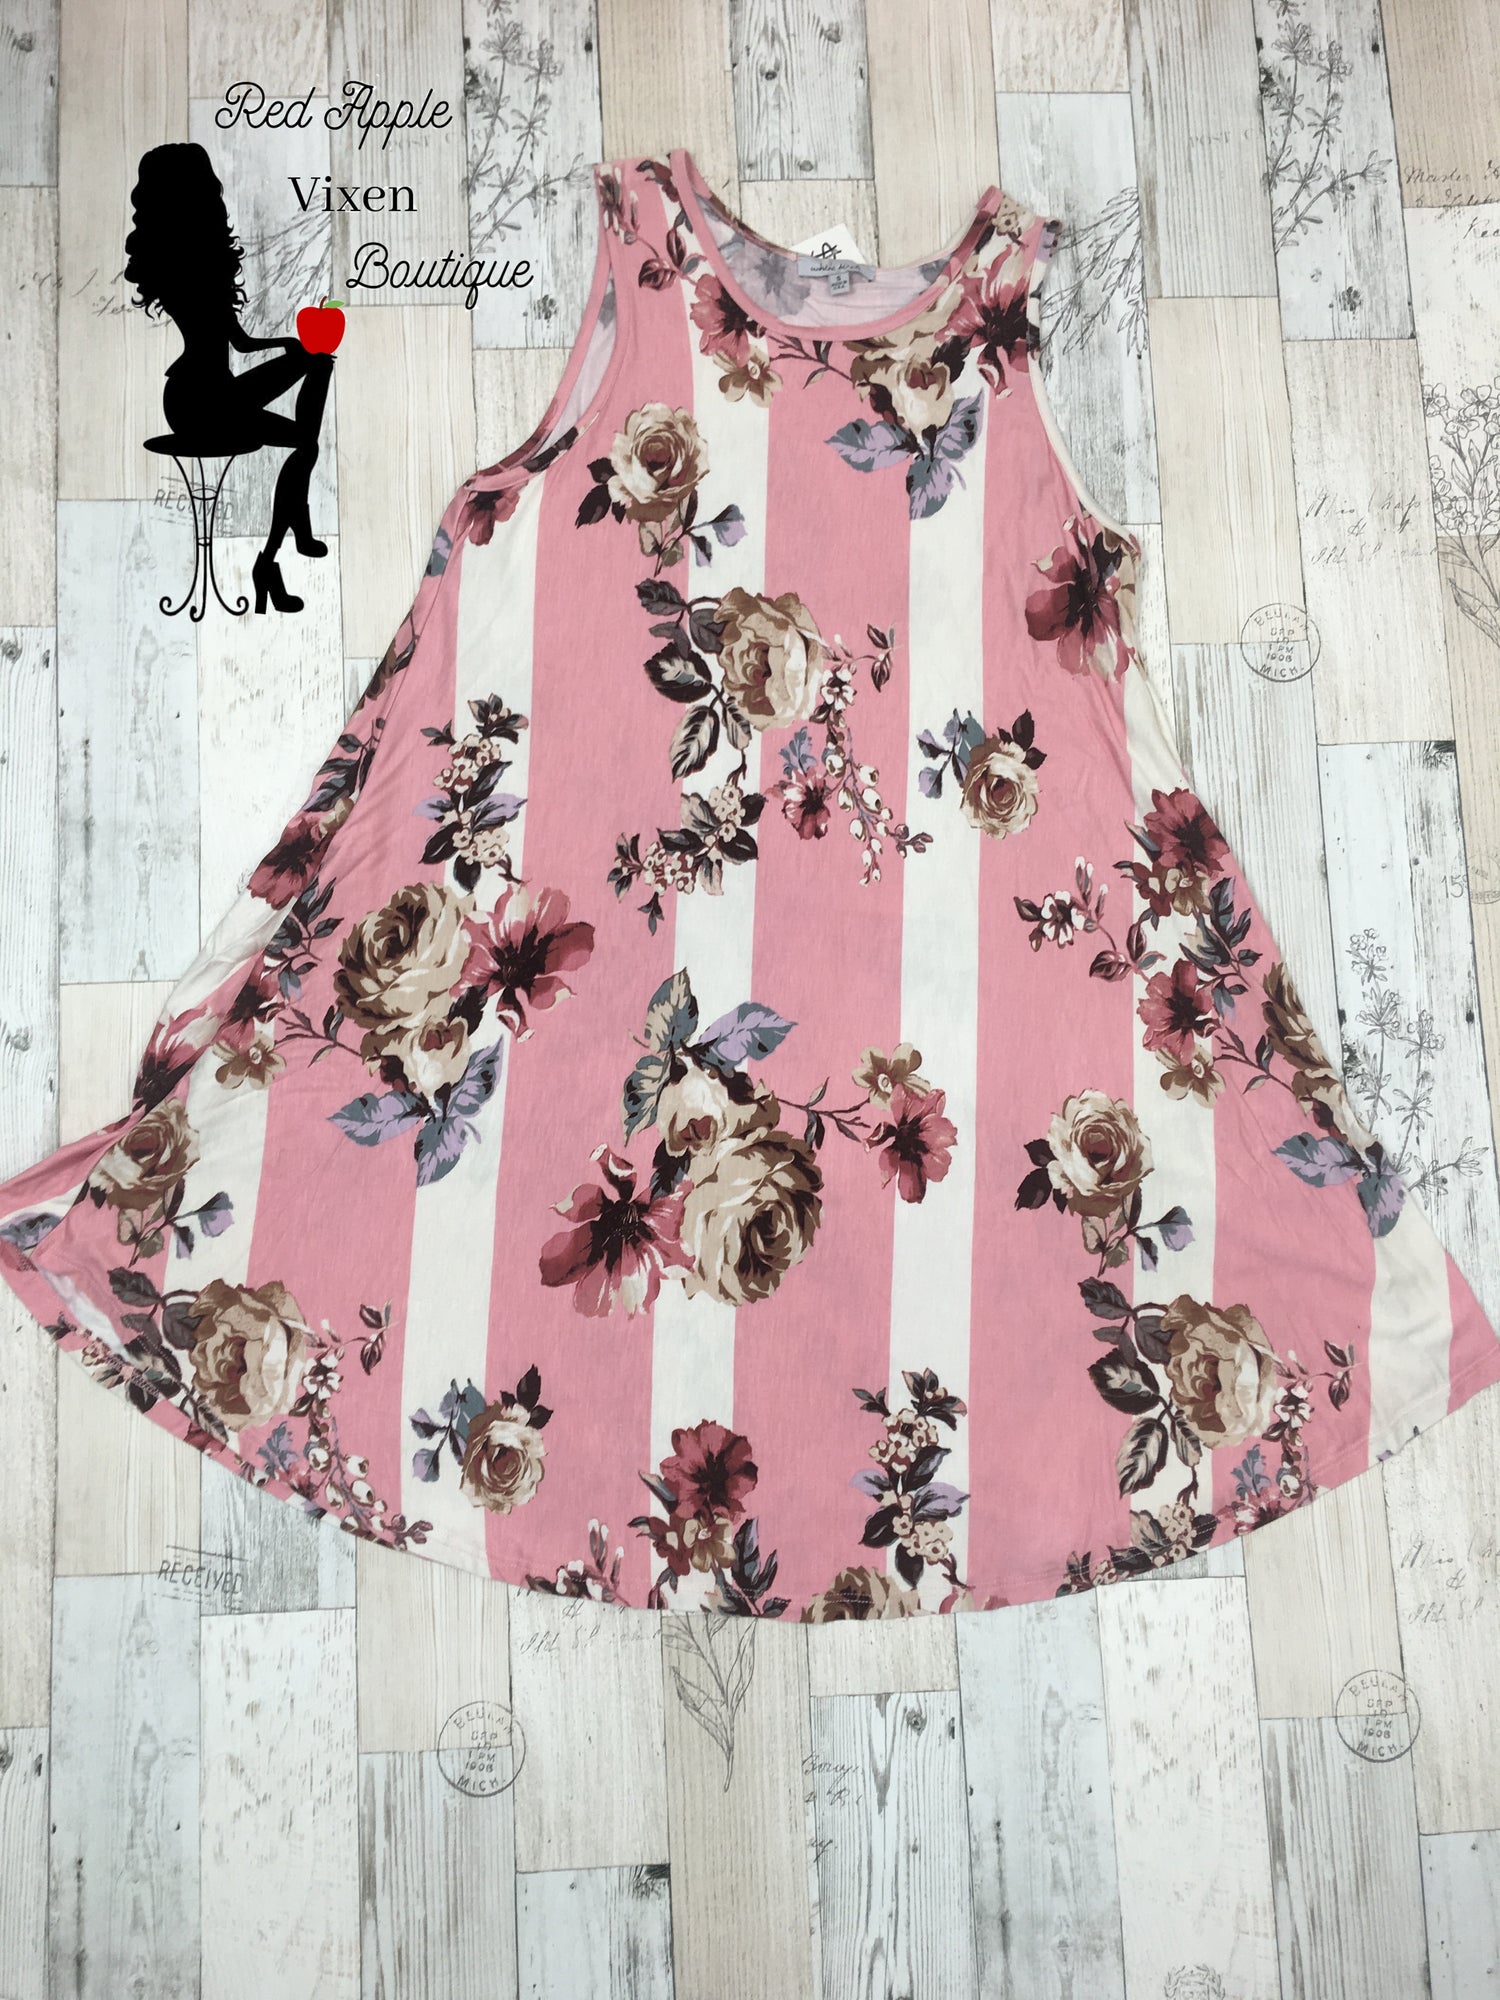 Floral & Stripe Sleeveless Dress - Red Apple Vixen Boutique